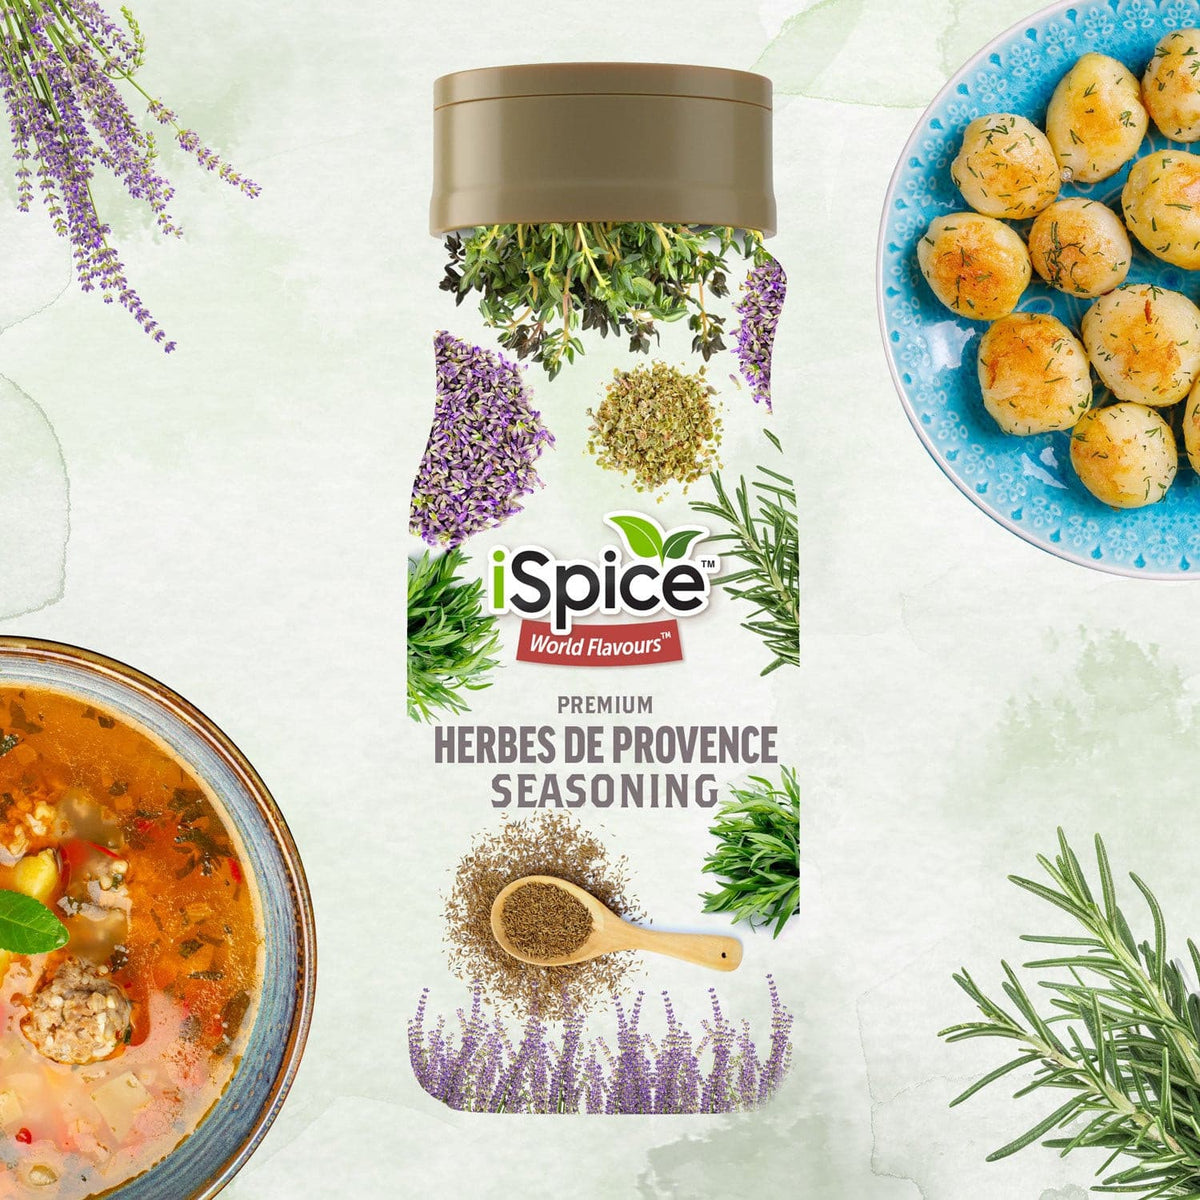 What is Herbes de Provence Seasoning?